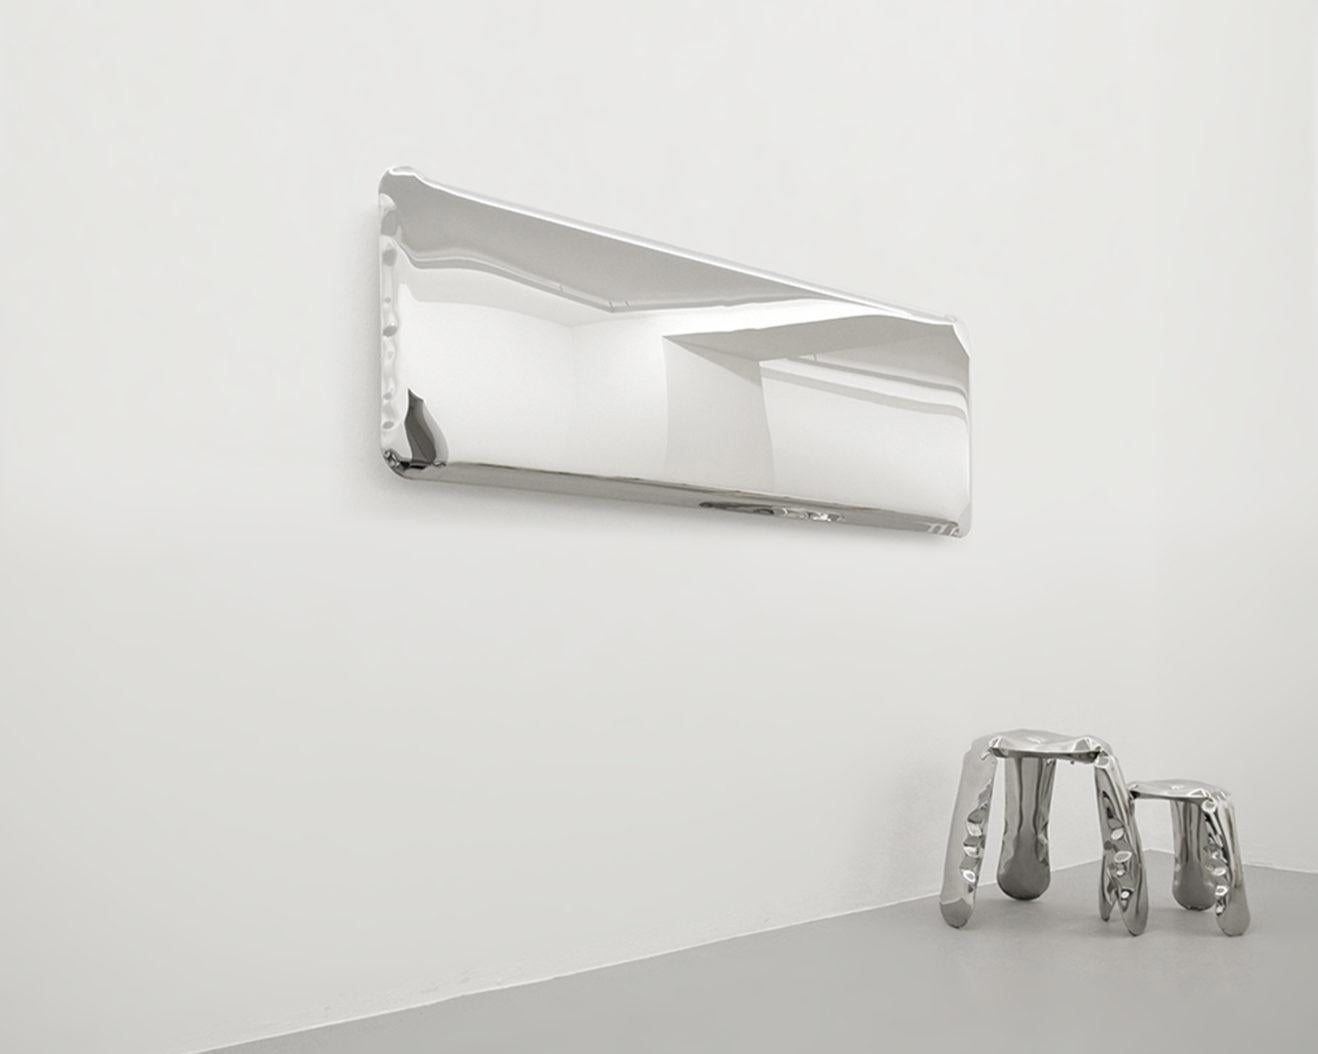 Organic Modern Tafla Mirror Q2 in Polished Stainless Steel by Zieta